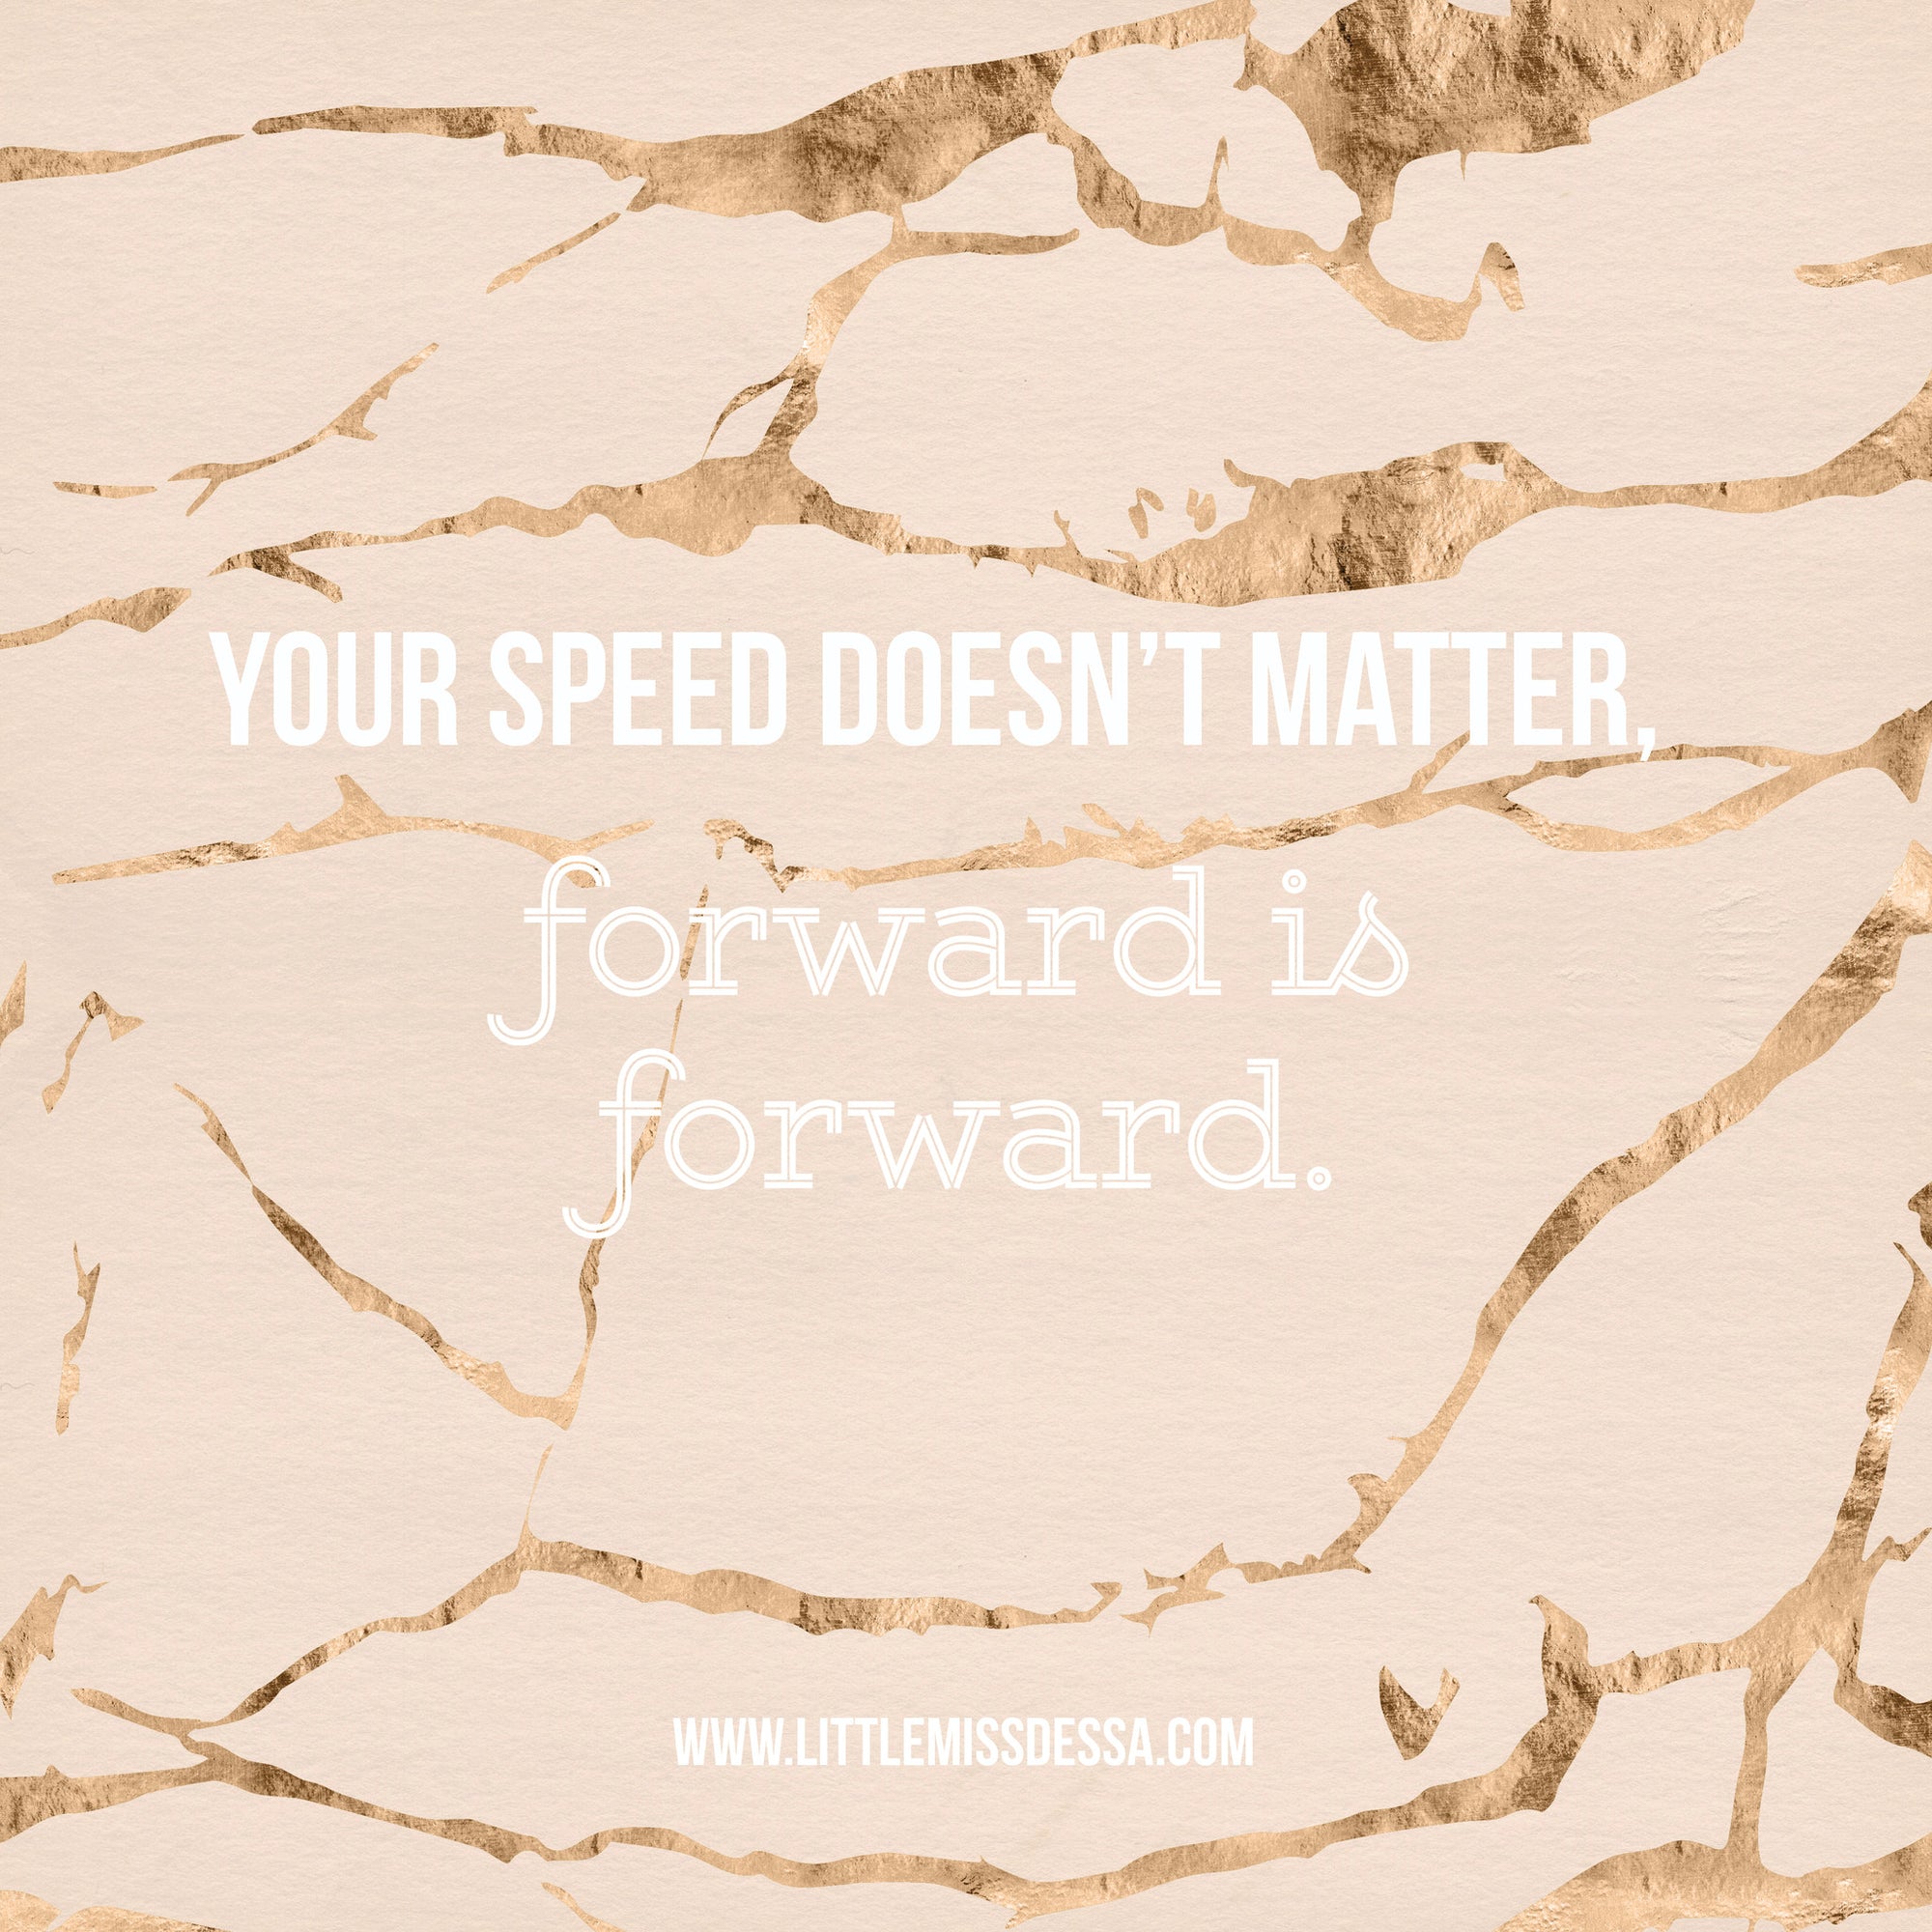 Motivation: Forward, is forward.